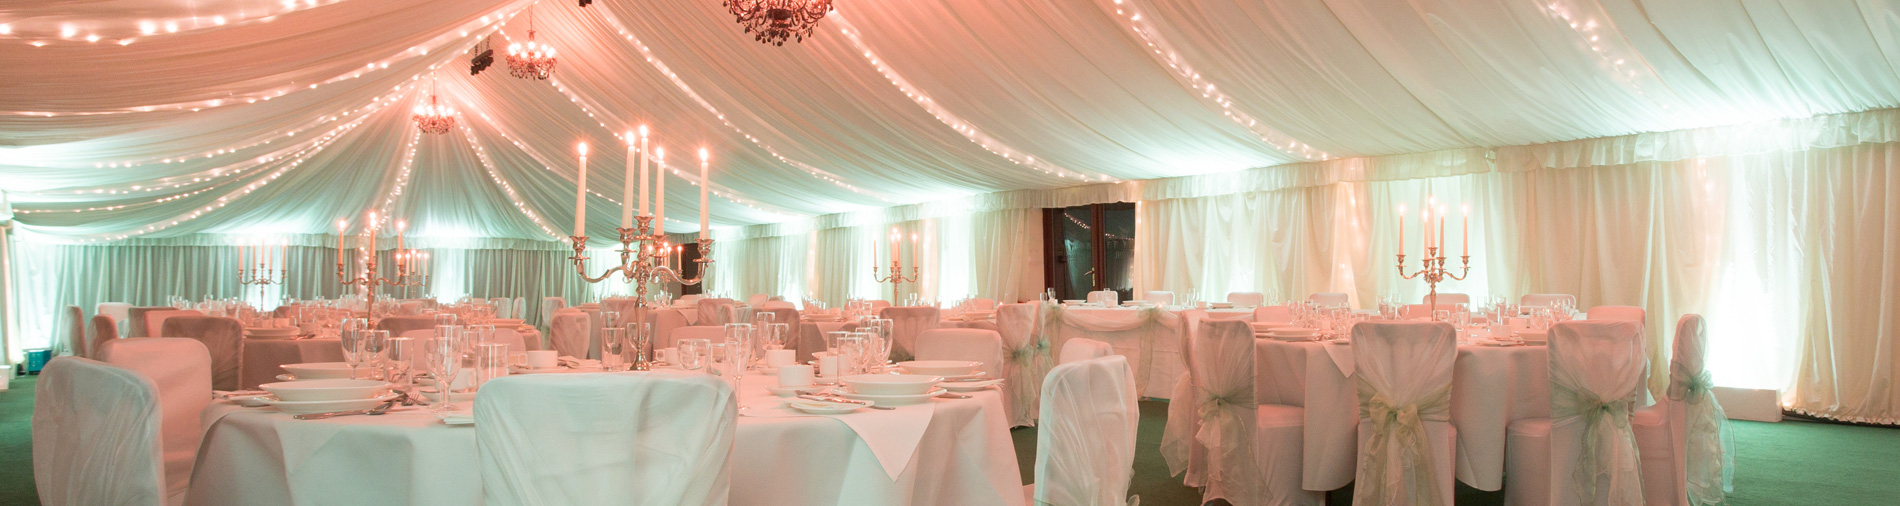 Wedding Venue Ipswich Suffolk All Manor Of Events